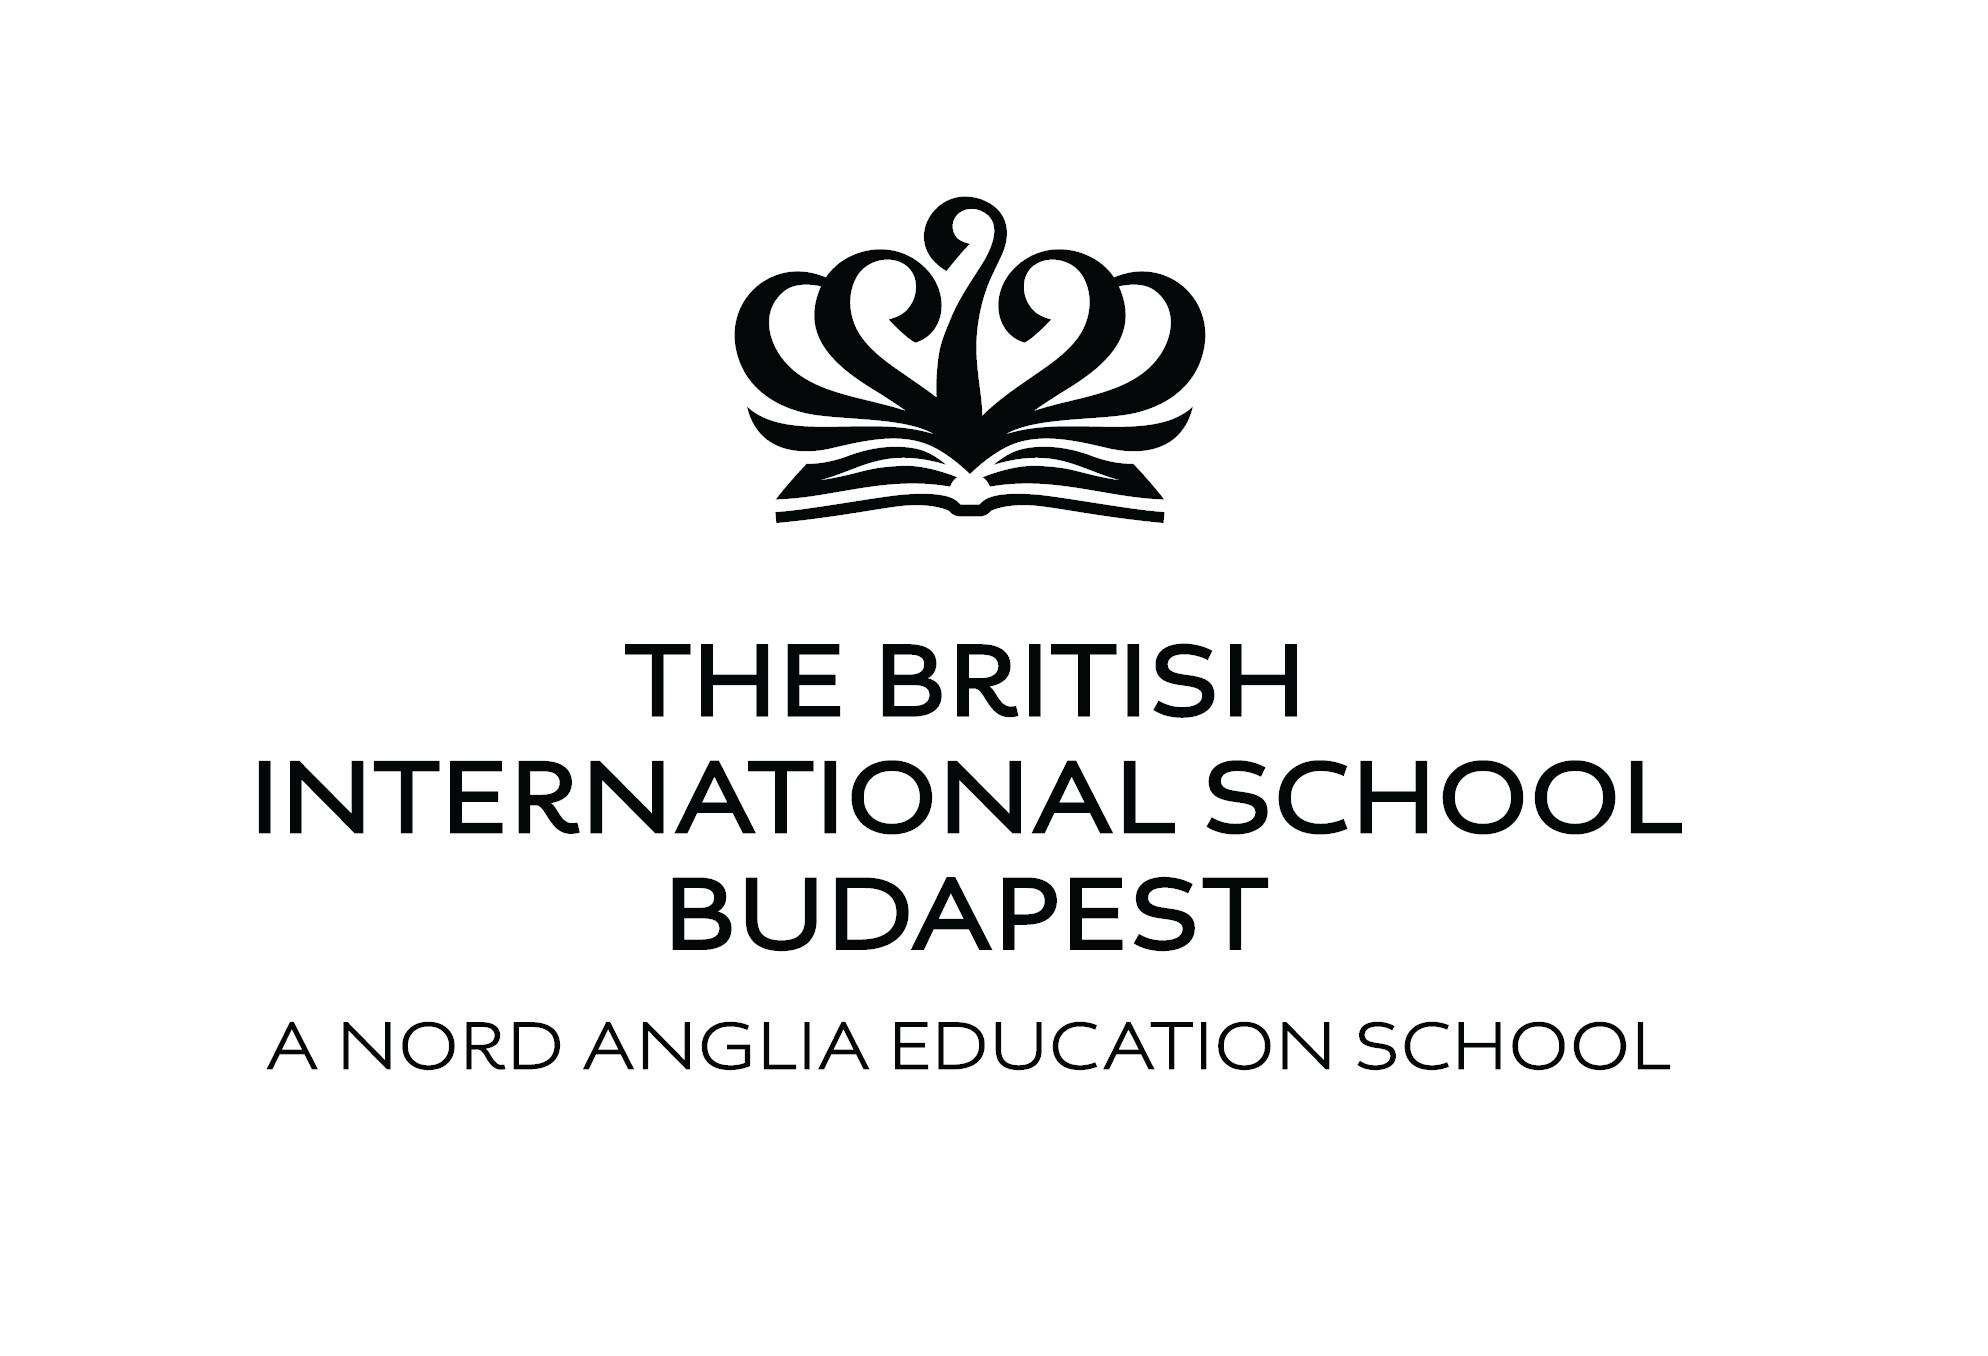 The British International School Budapest